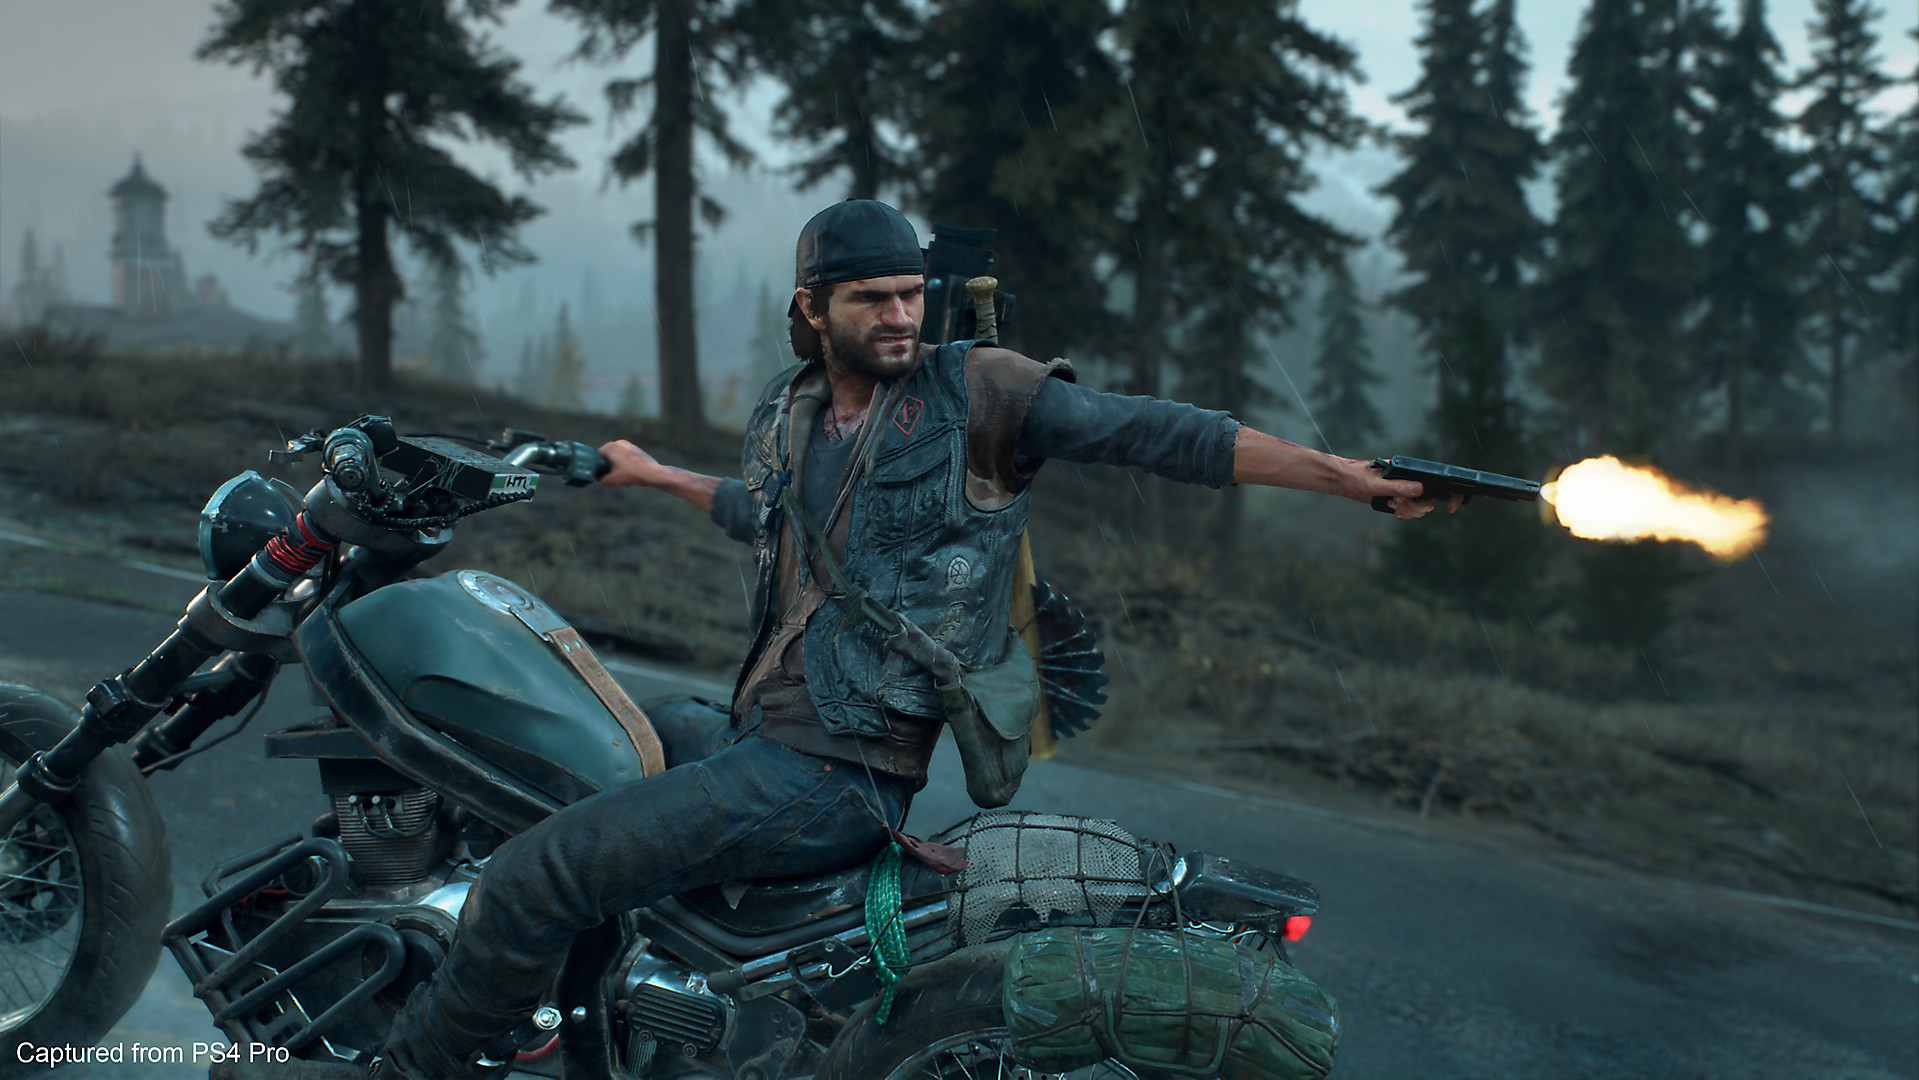 A man rides a motorcycle while turning around to shoot at something behind him